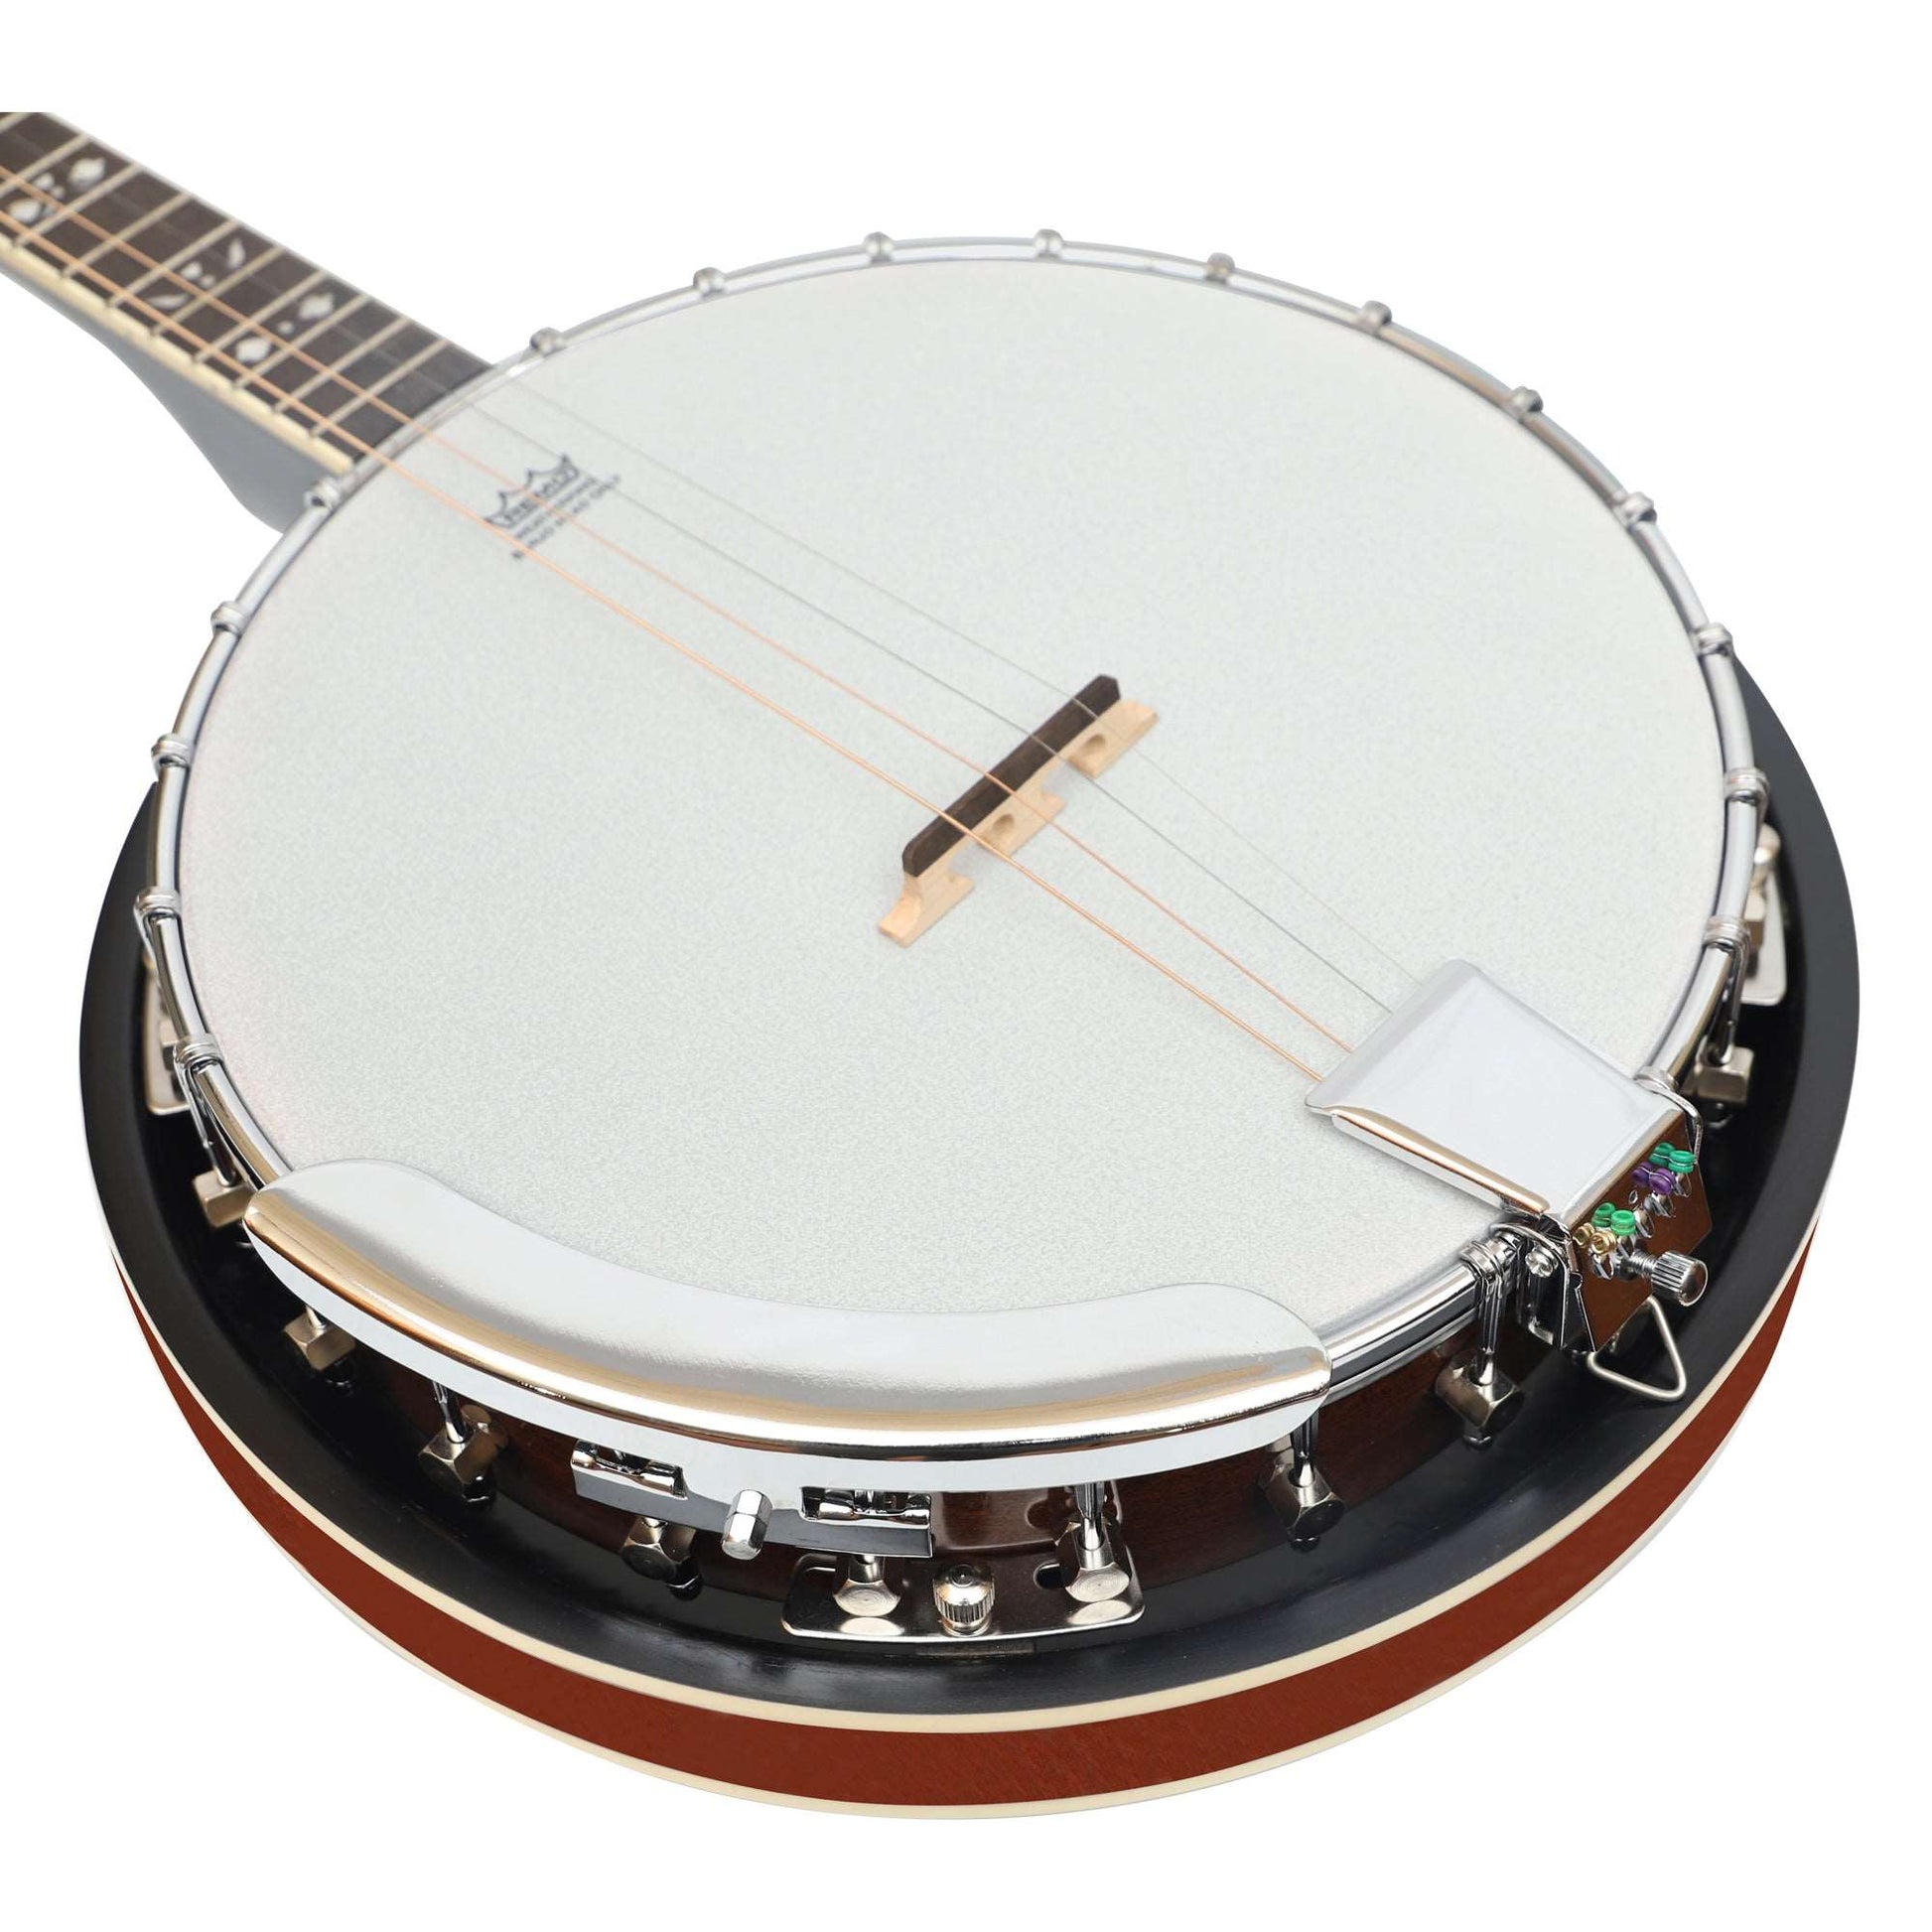 Heartland 4 String 19 Fret Irish Tenor Banjo Player Series with Closed Solid Back Sunburst Finish